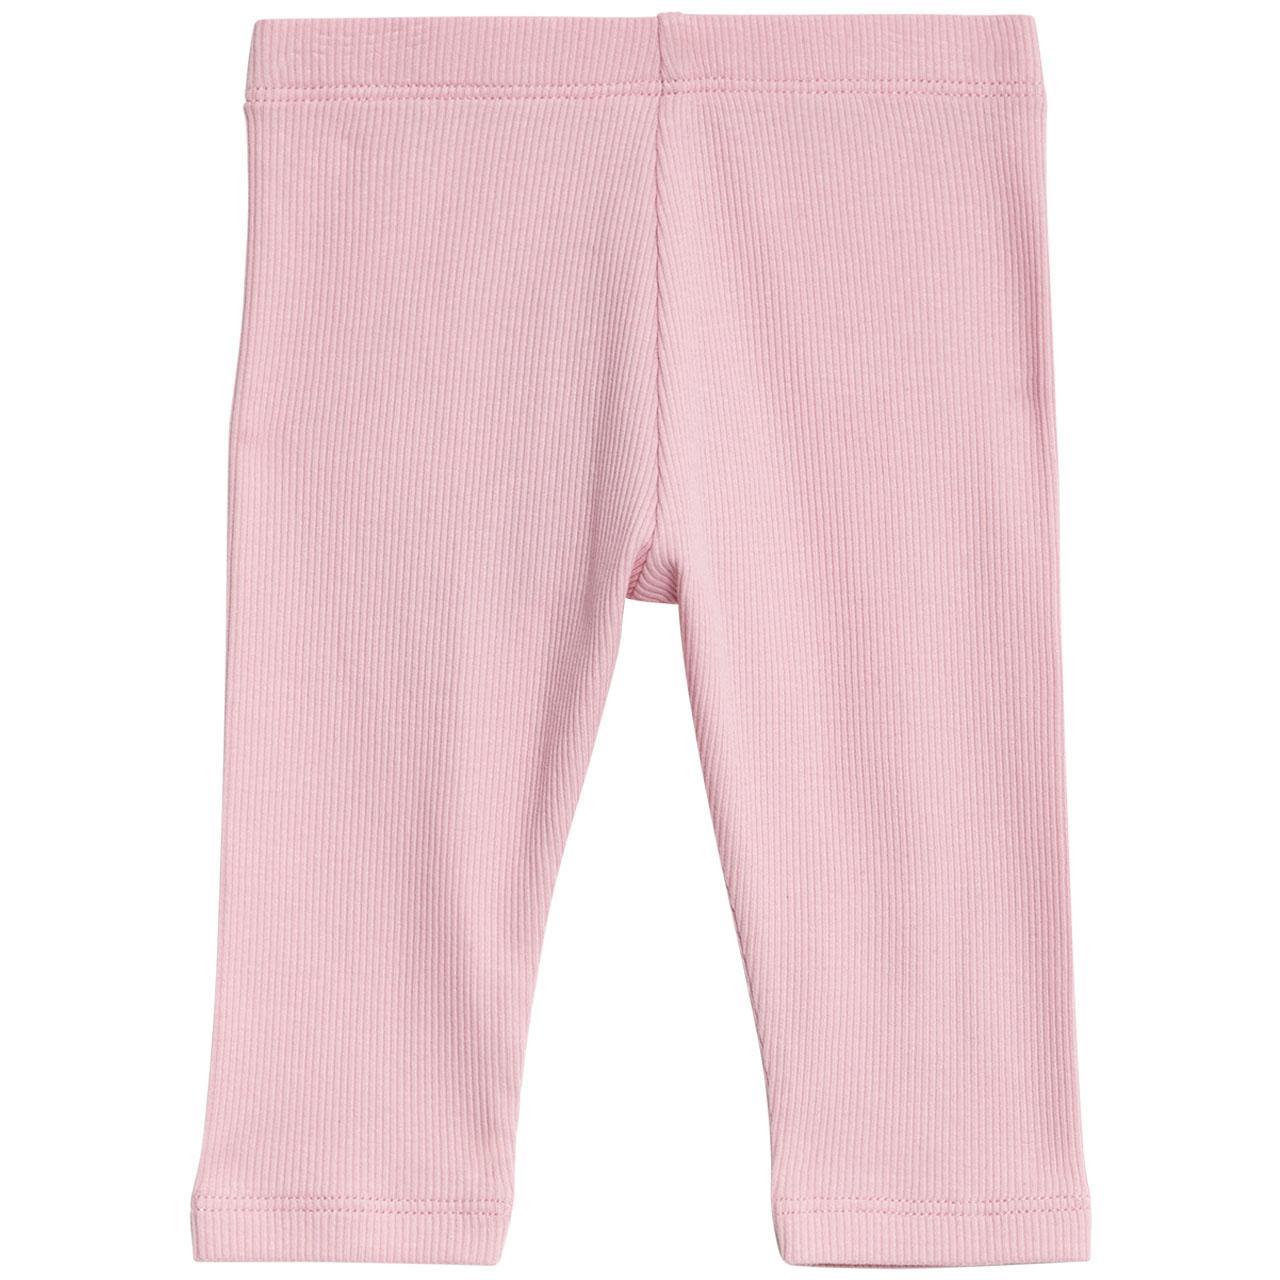 M&S Girls Cotton Rich Plain Joggers, 2-7 Years, Light Pink